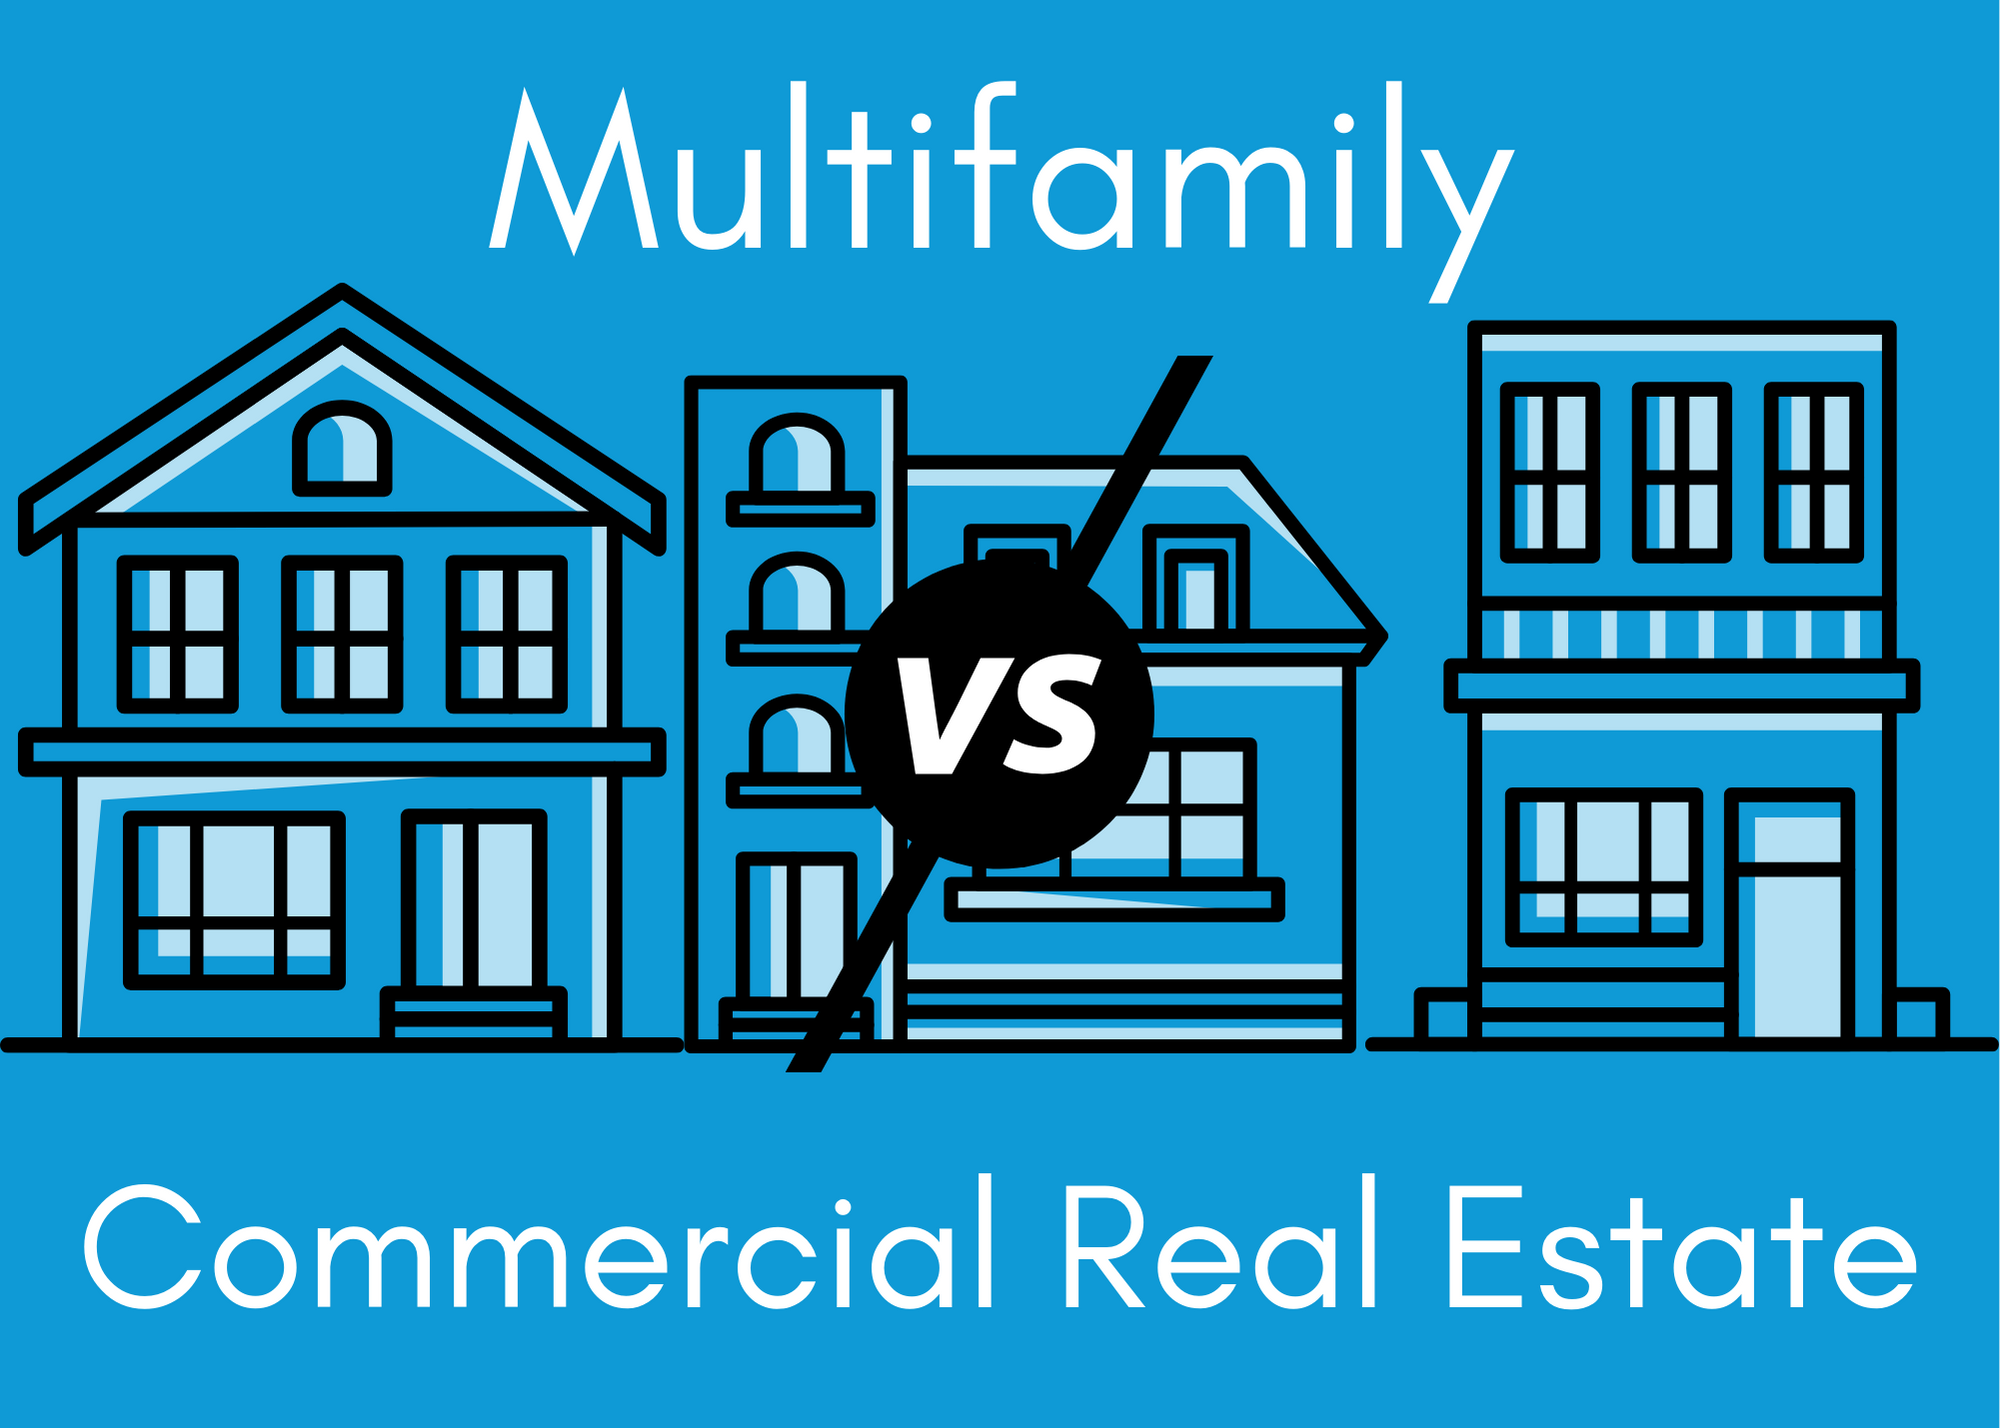 Multifamily vs Commercial Real Estate